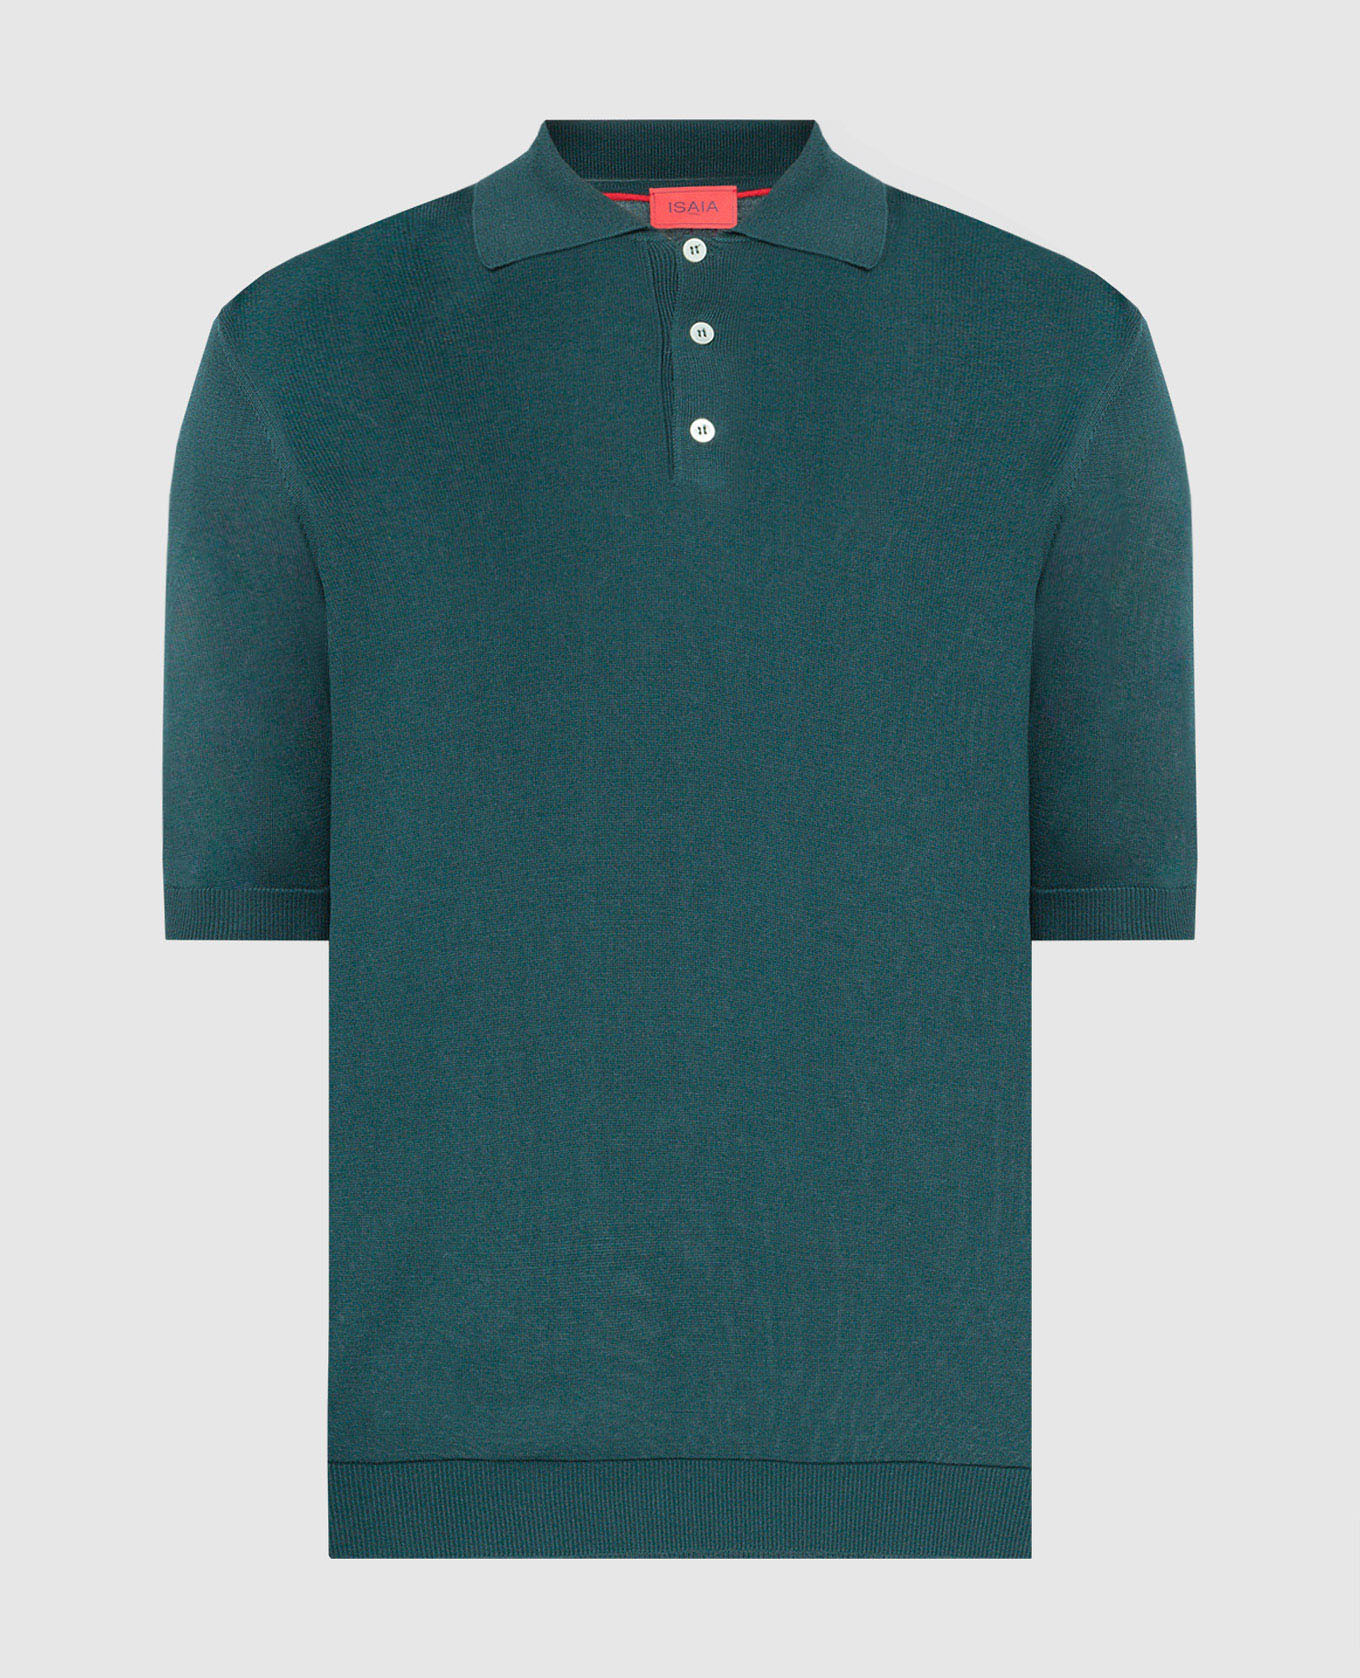 Green silk polo shirt